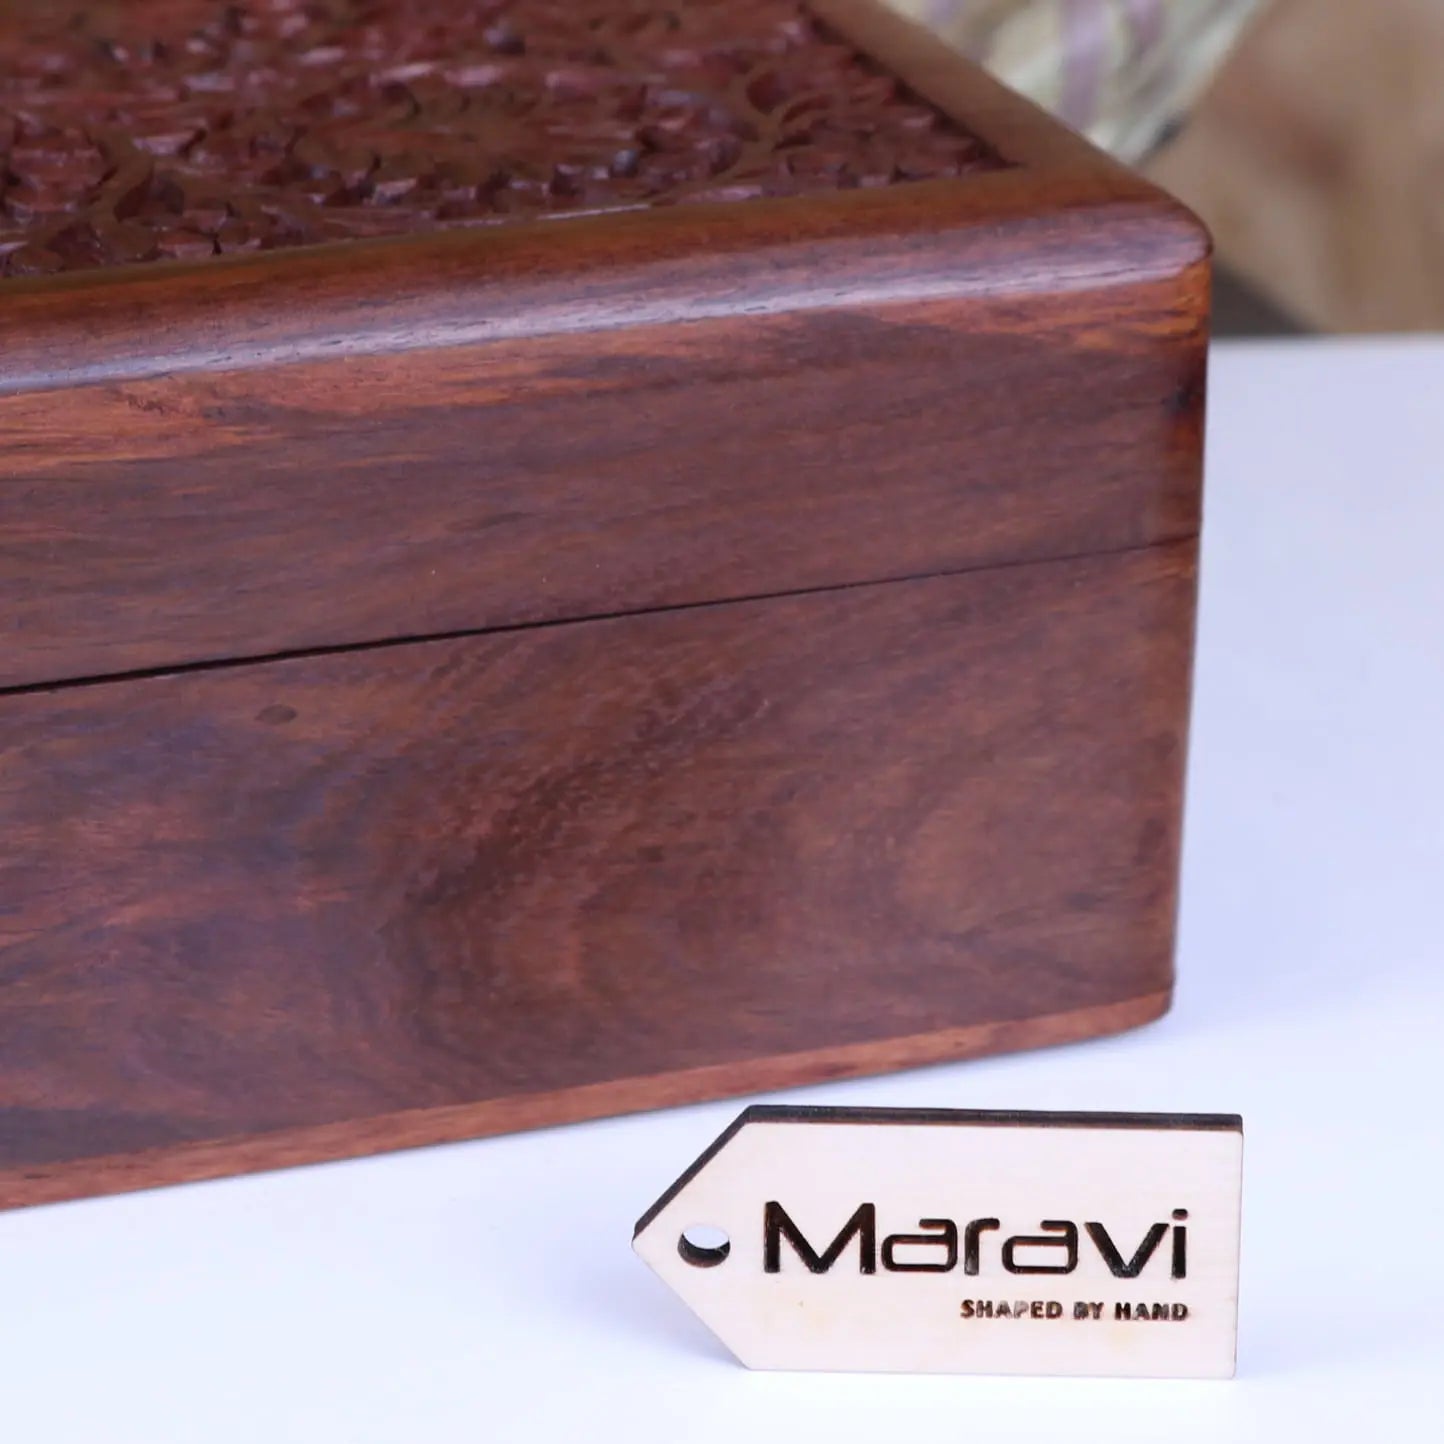 Sateek Large Carved Storage Box - Closeup of Woodgrain